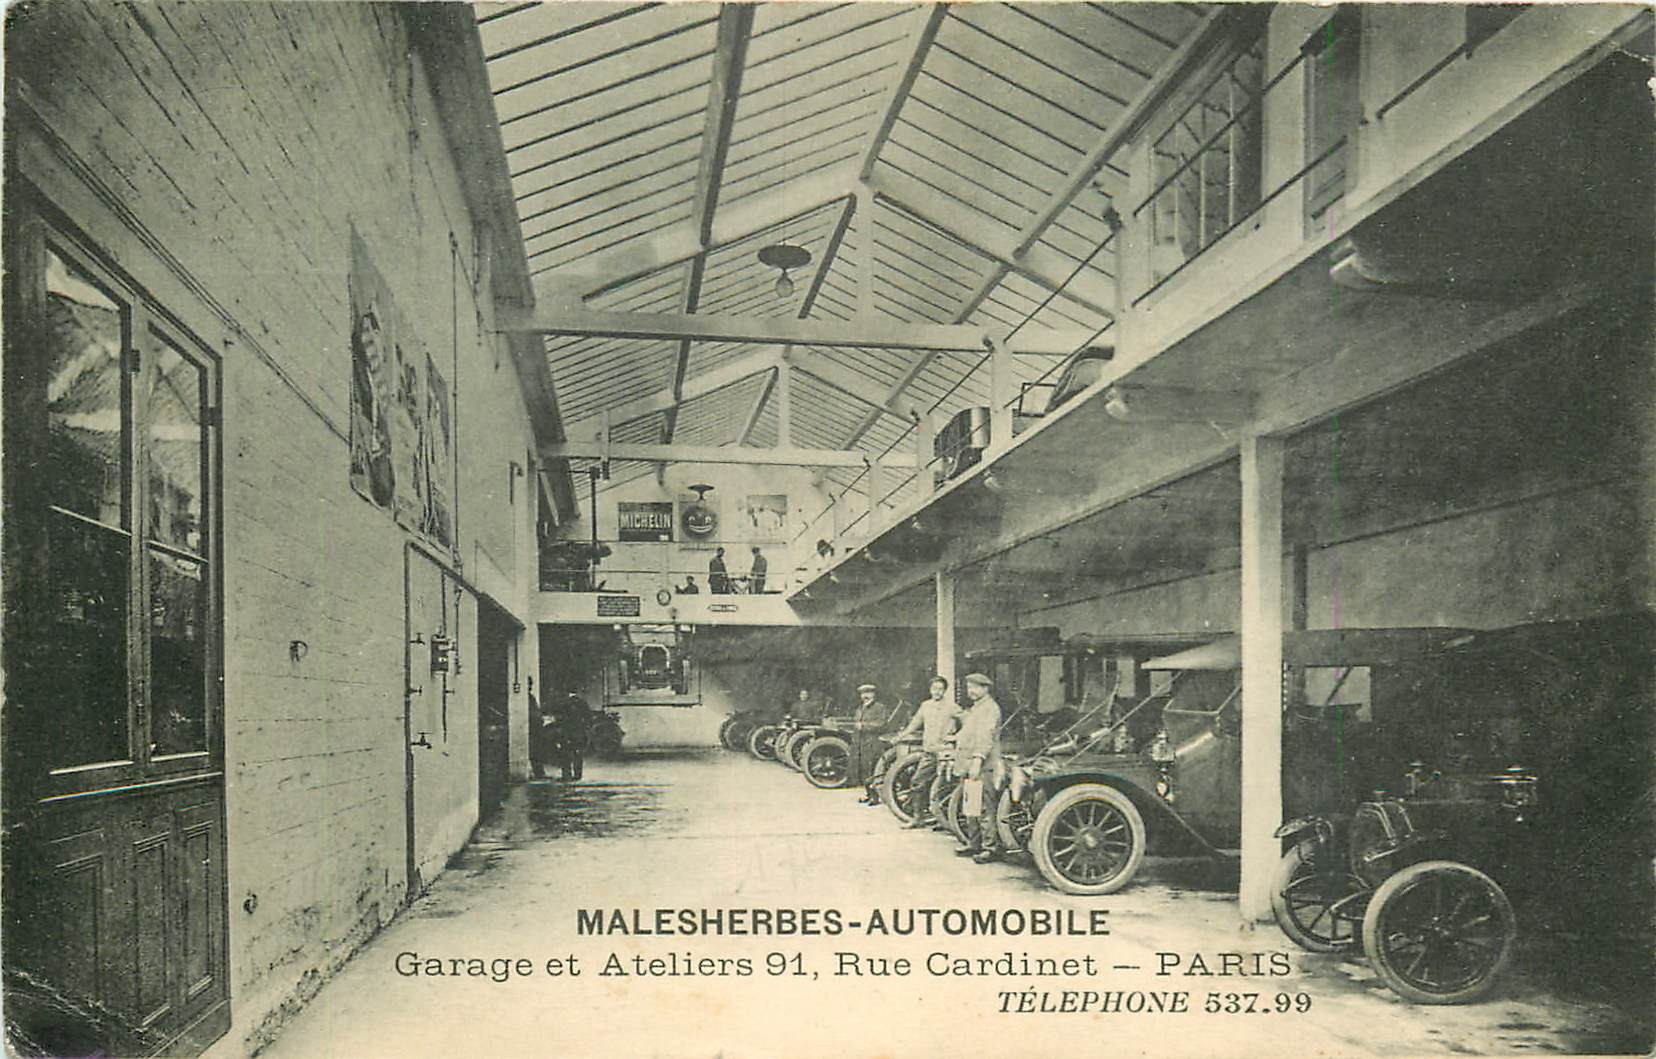 WW PARIS 17. Malesherbes Automobile Garage et Ateliers 91 rue Cardinet 1914